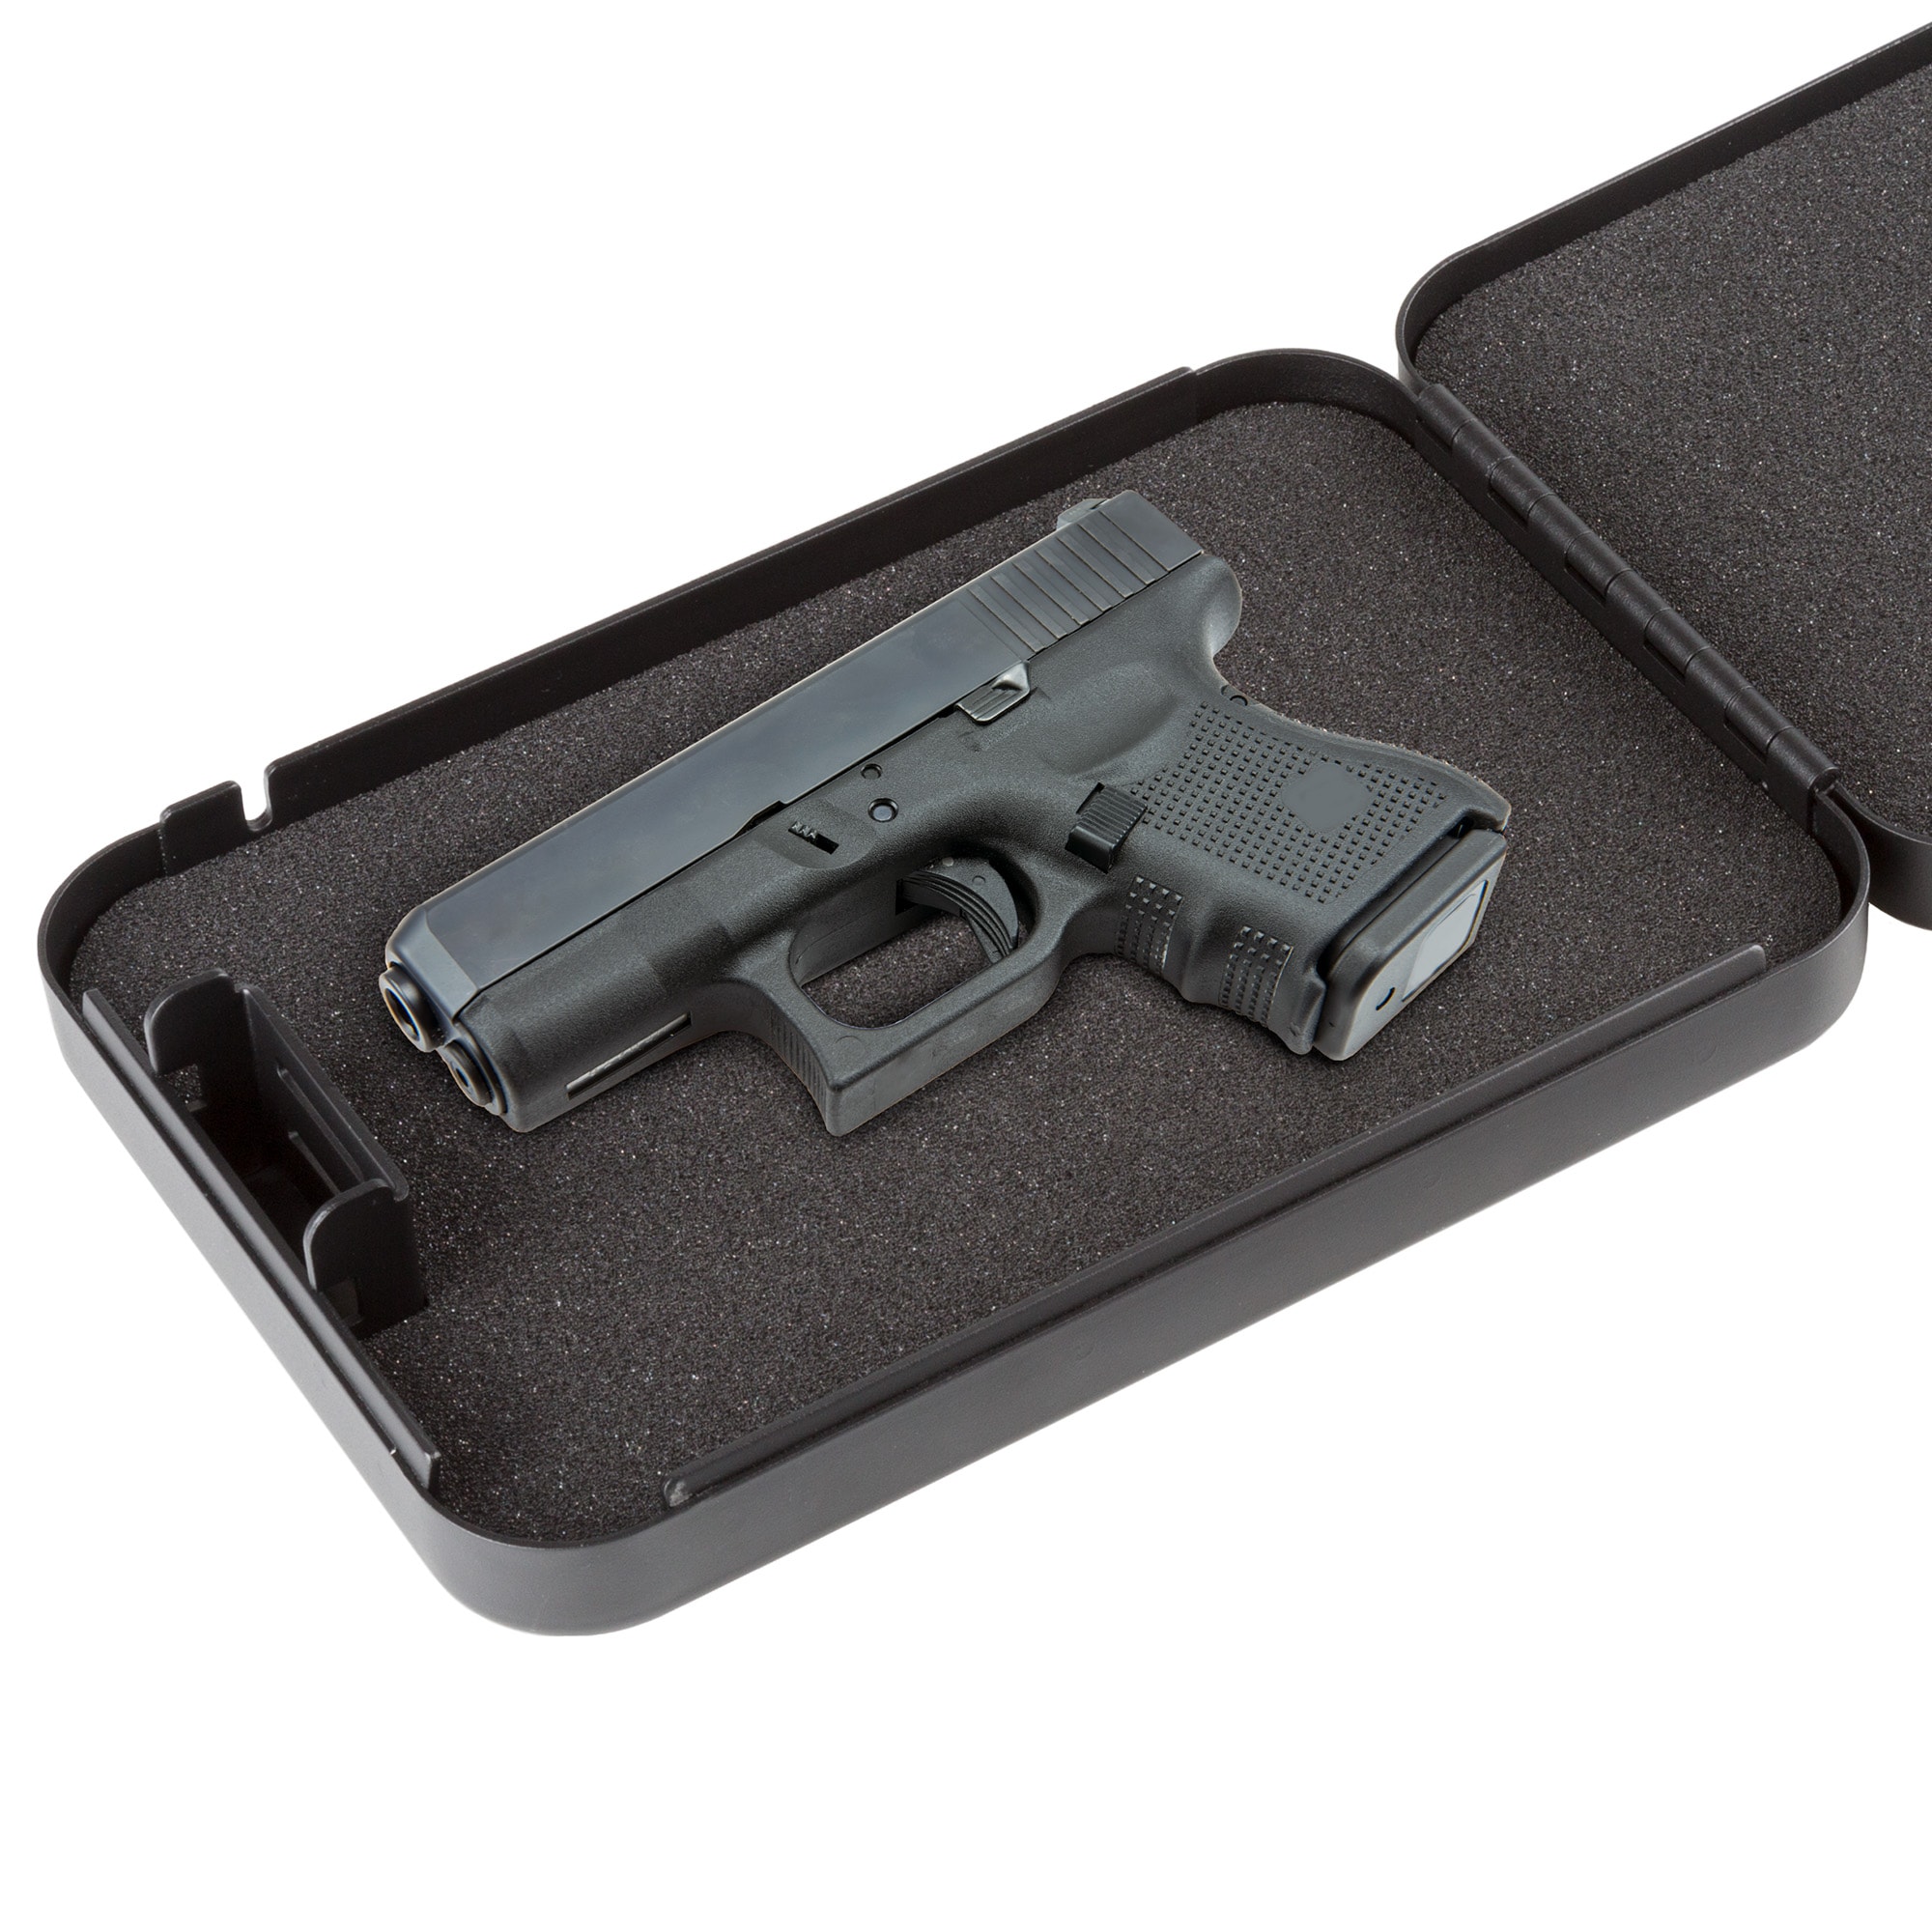 NEW Hand Gun Pistol HandGun Safe Cable Lock Box Cash Security LockBox Travel Car 